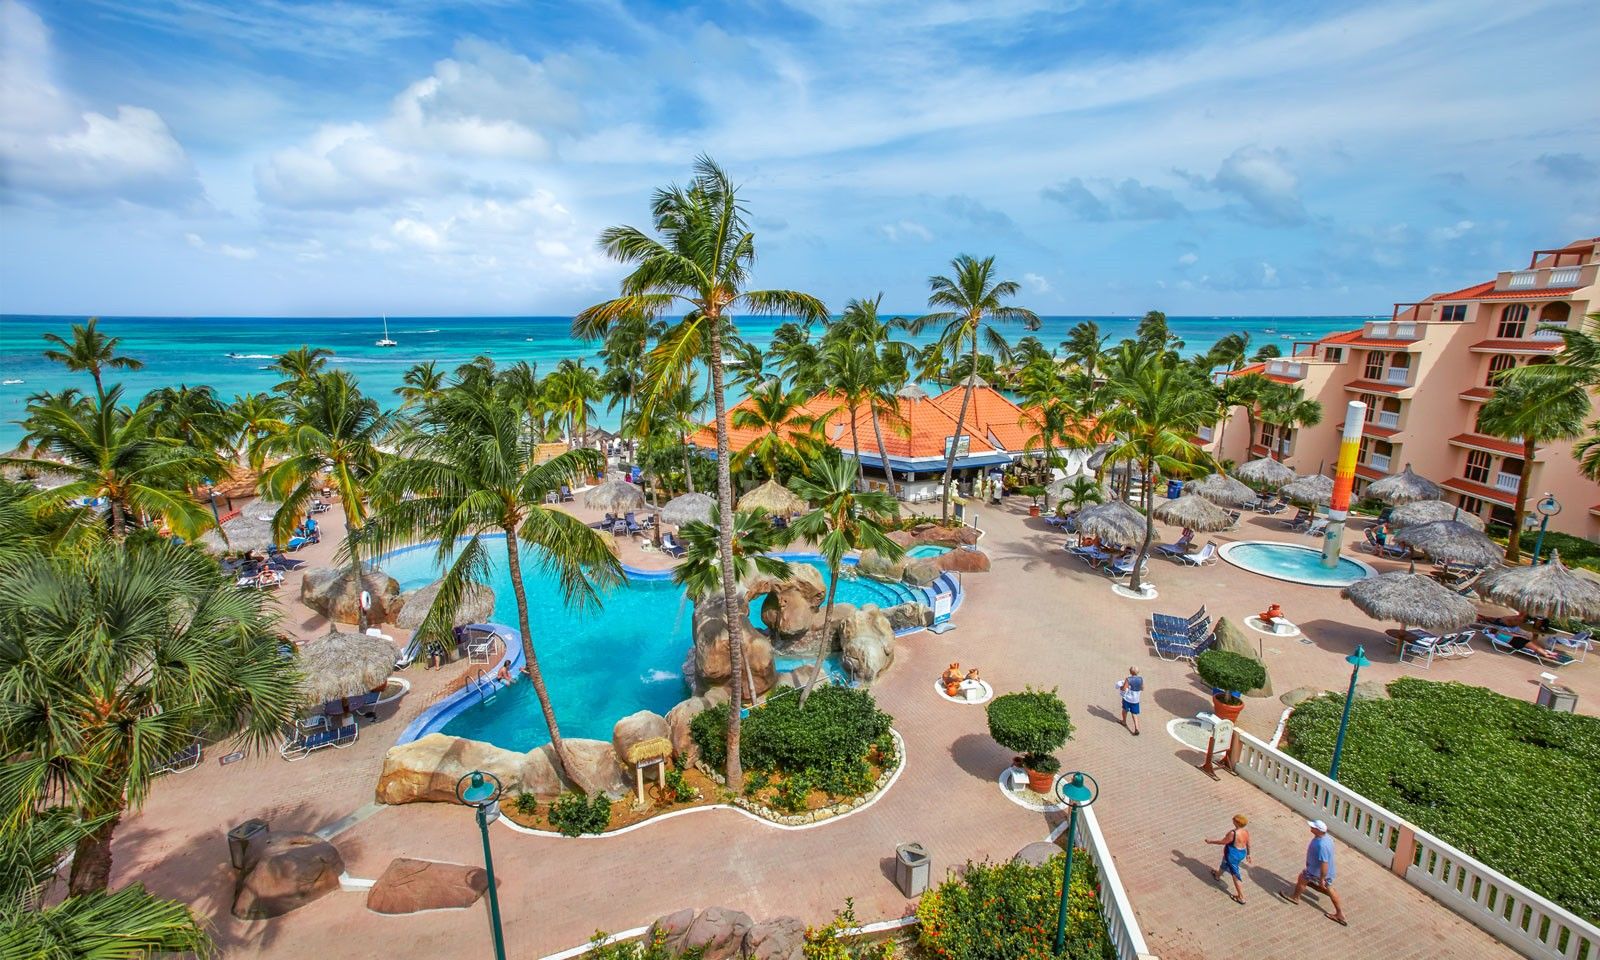 Playa Linda Beach Resort, Palm Beach, Aruba Timeshare Resort | RedWeek